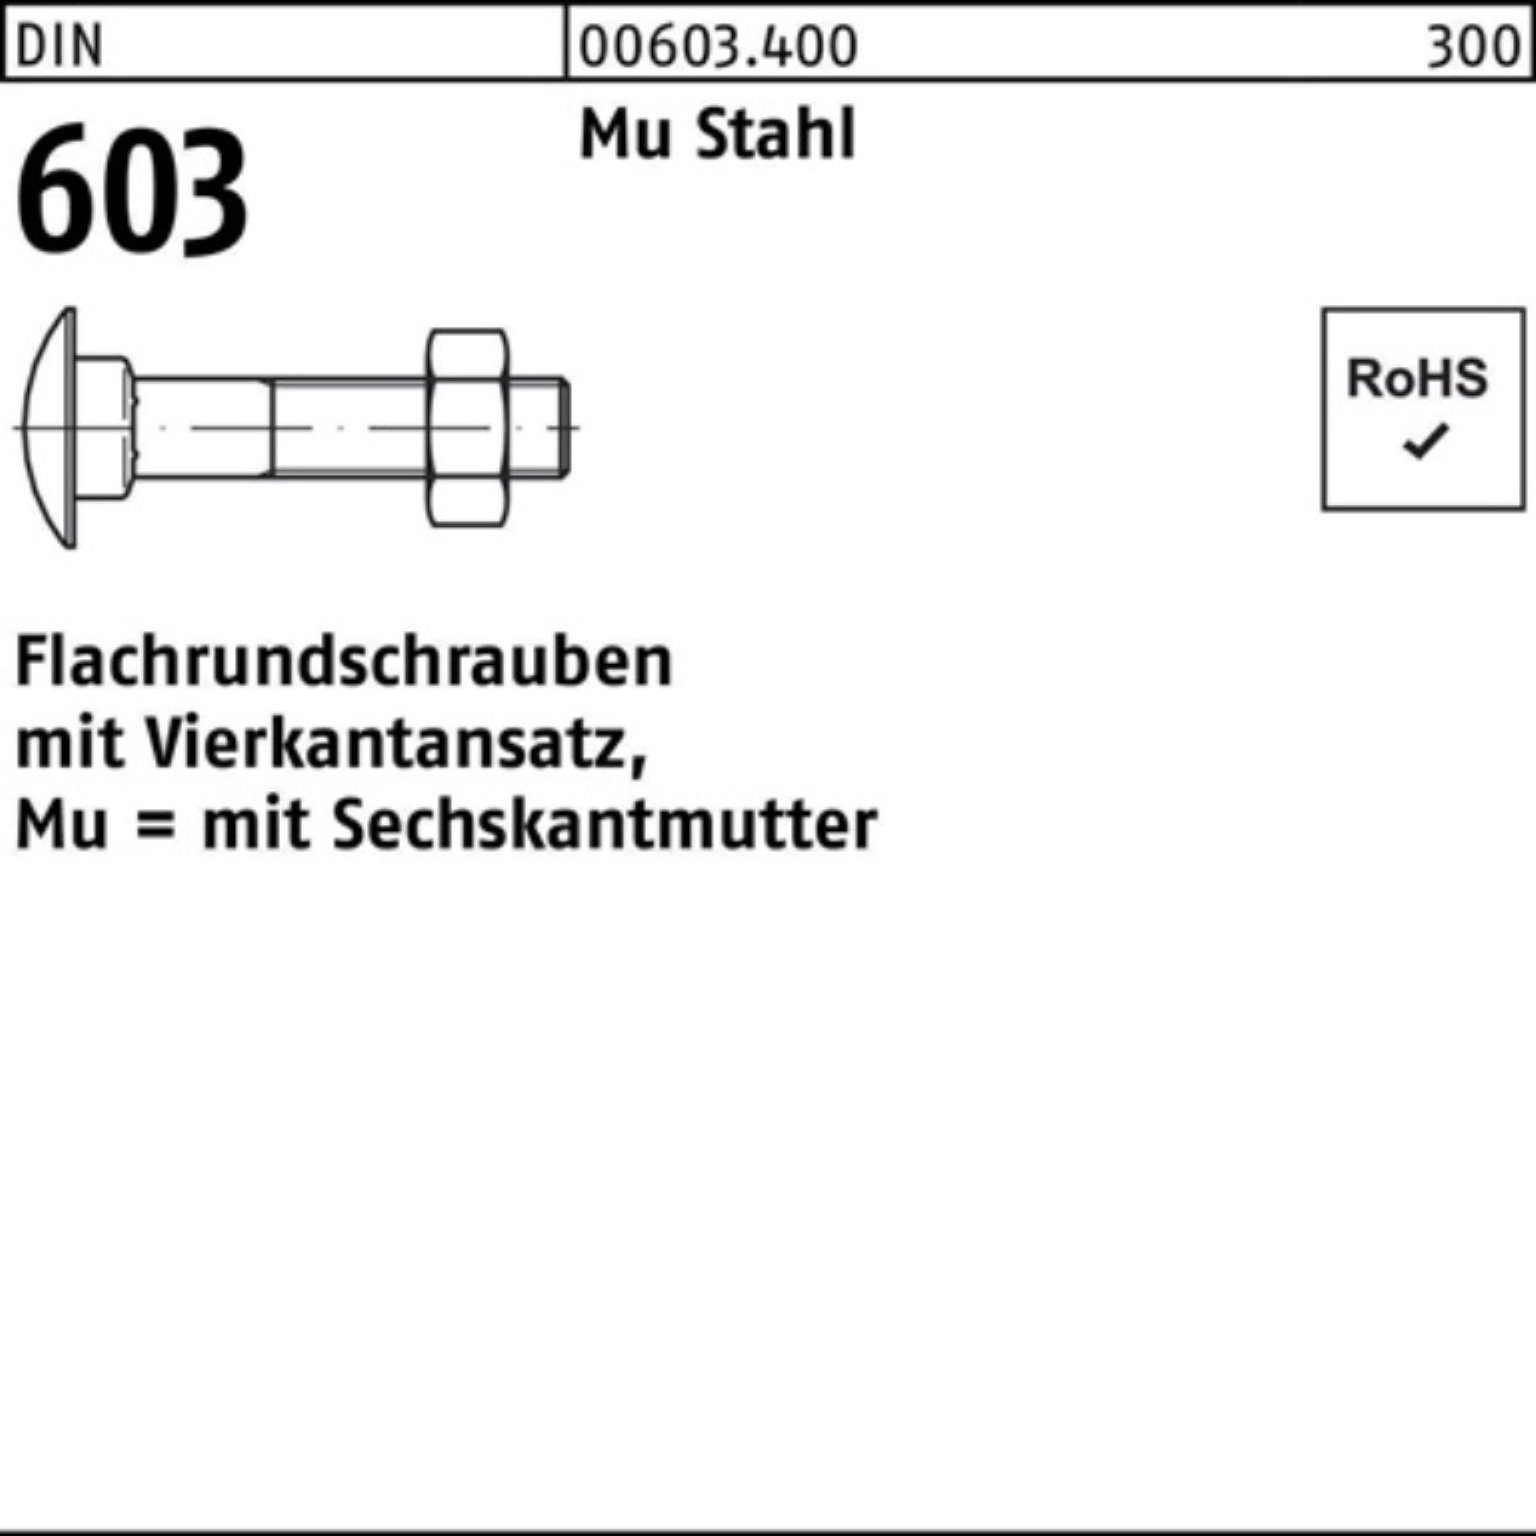 Vierkantansatz/6-ktmutter M12x45 Reyher Pack DIN Schraube 100er Flachrundschraube 603